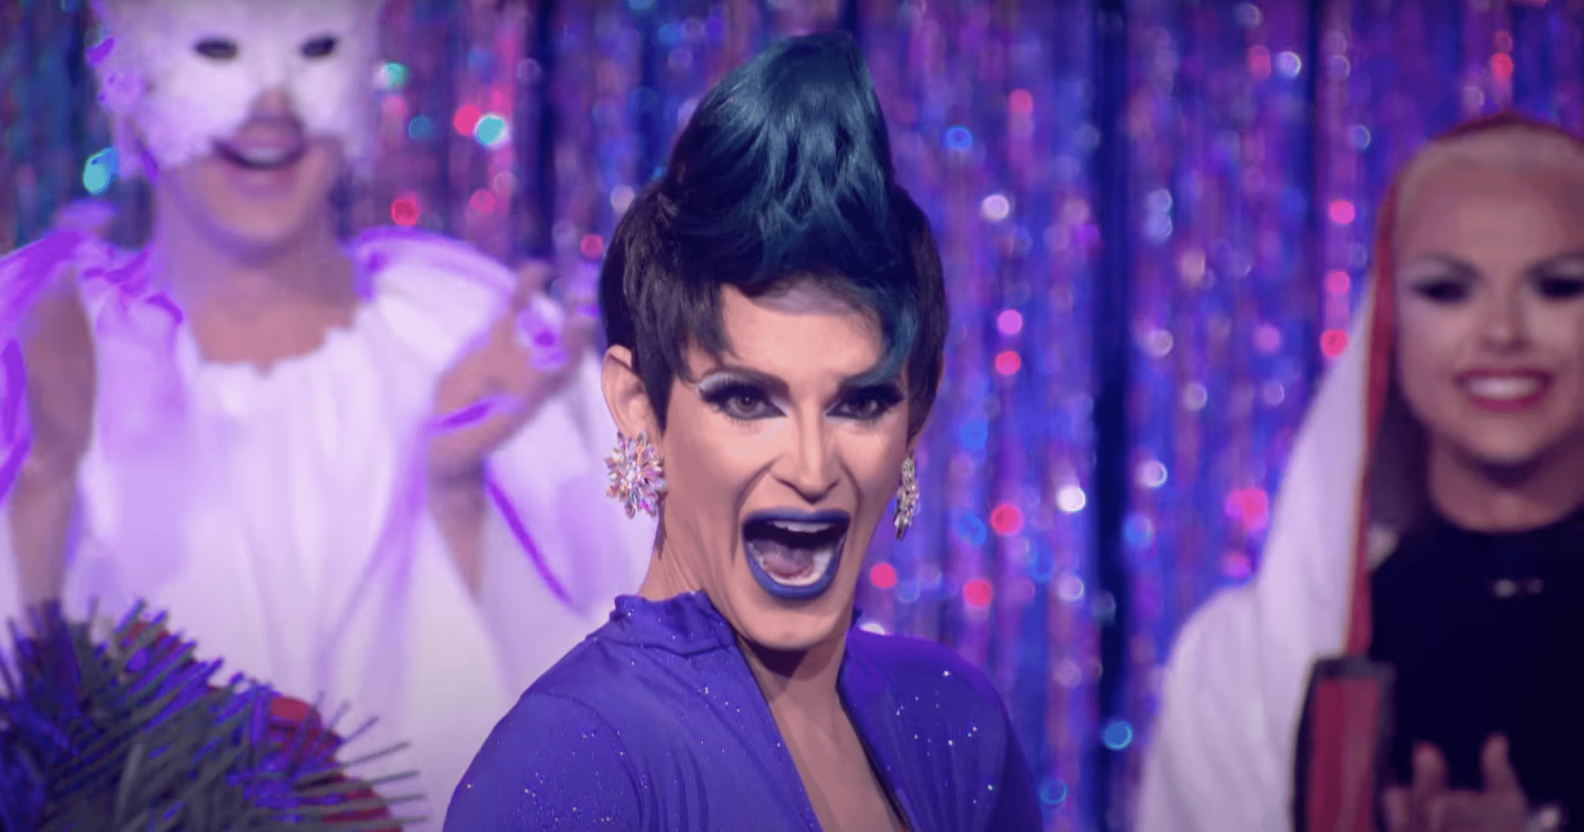 A screenshot of Cynthia Lee Fontaine wearing a purple dress taken from TV show RuPaul's Drag Race